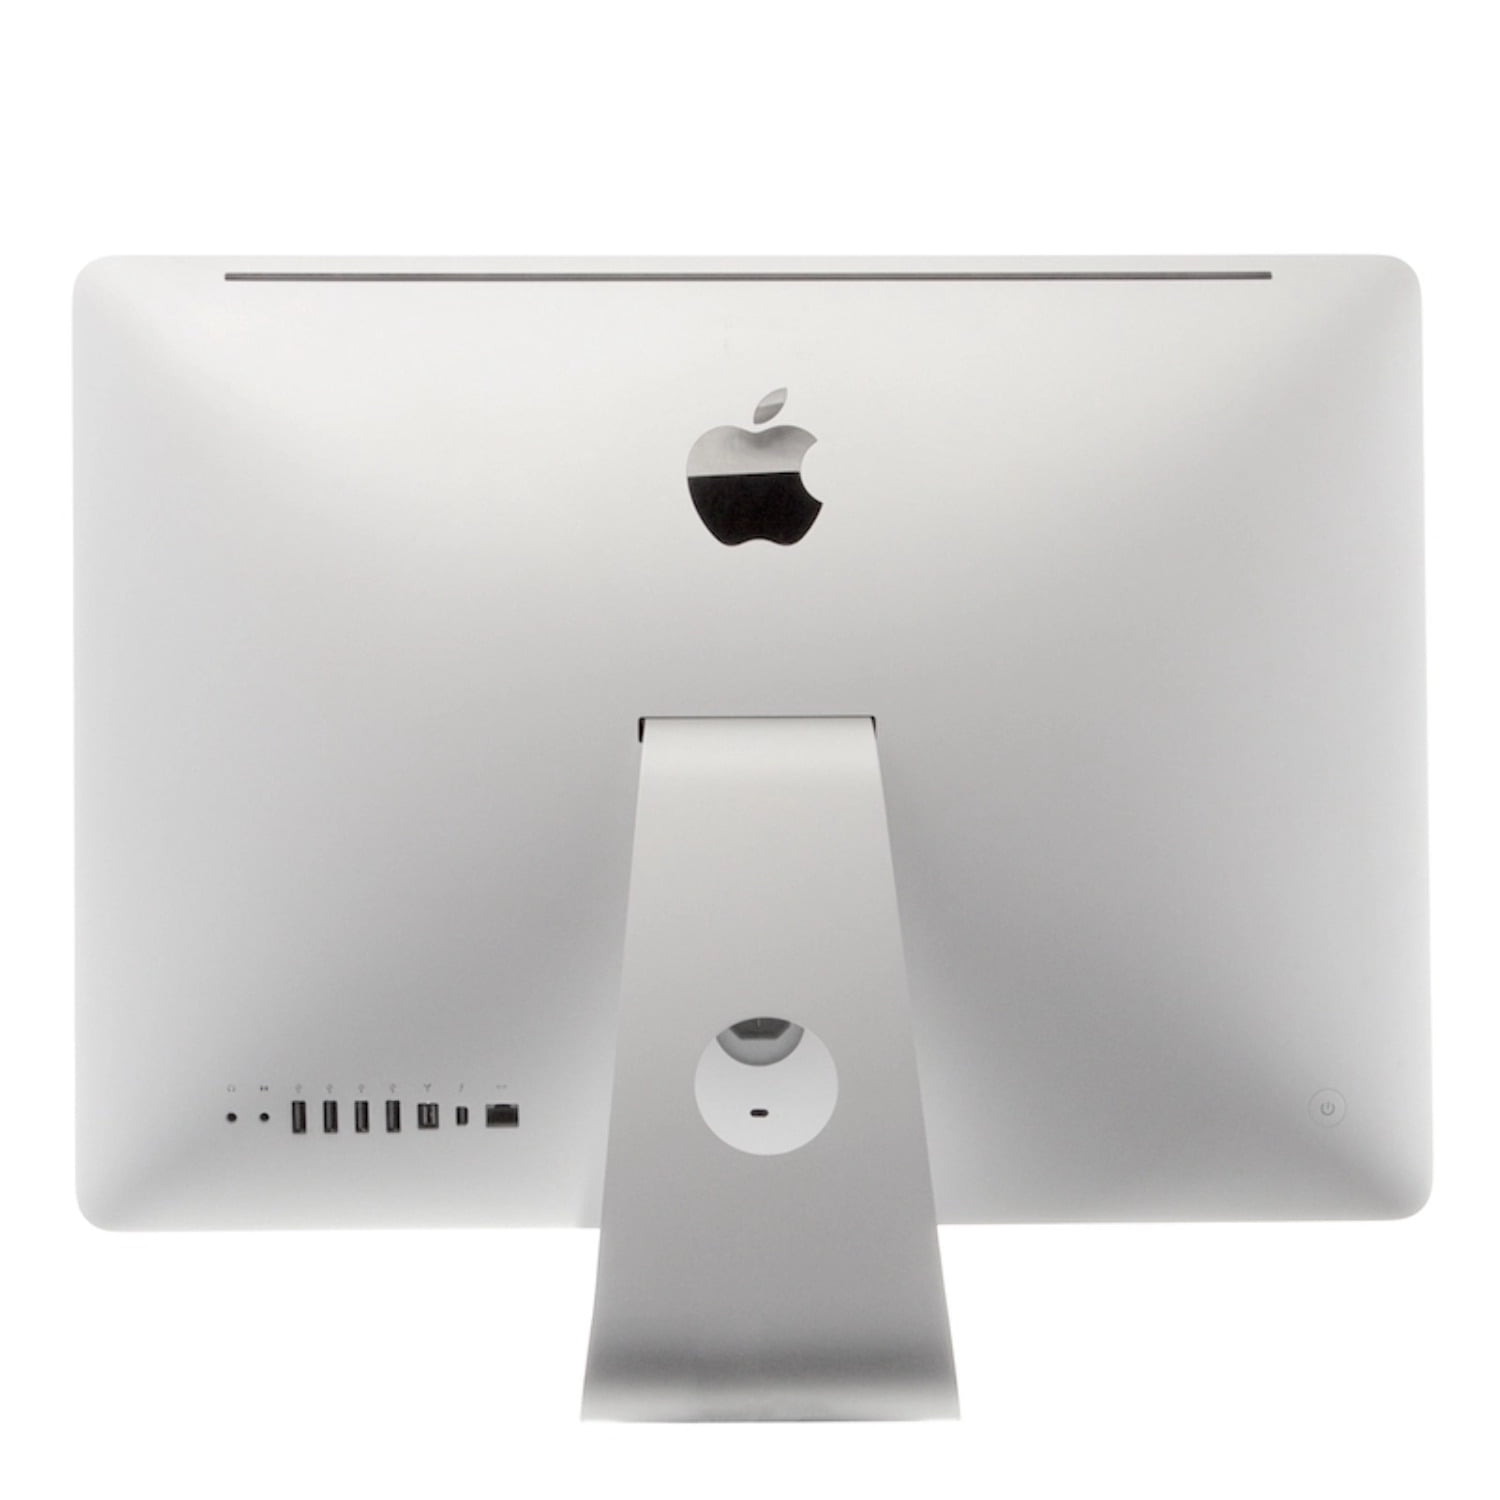 Apple iMac 21.5" All-in-Computer, Intel Core i5, 8GB RAM, 500GB HD, macOS, MC309LL/A (Used) - Walmart.com